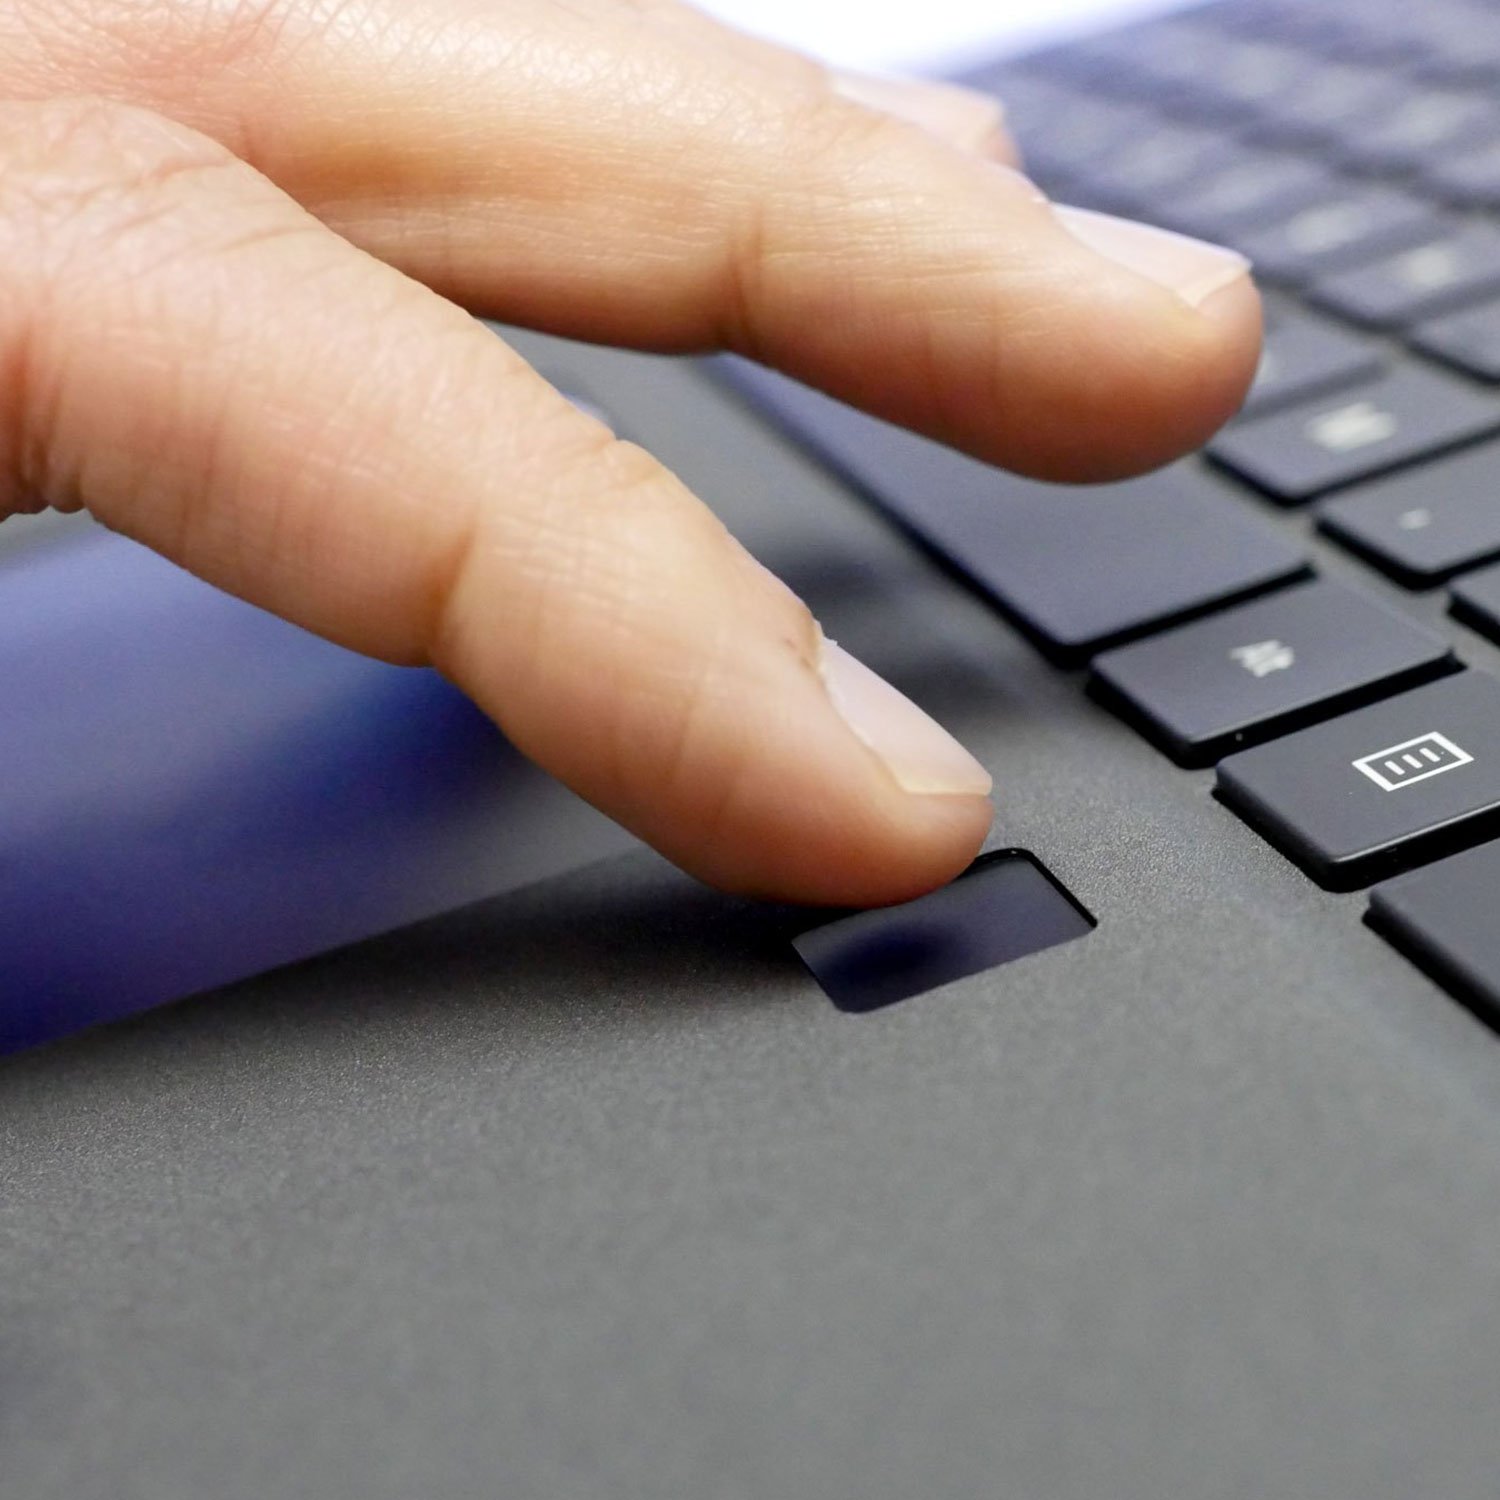 کیبورد تبلت سرفیس پرو Surface Pro Signature Keyboard with Fingerprint Reader 